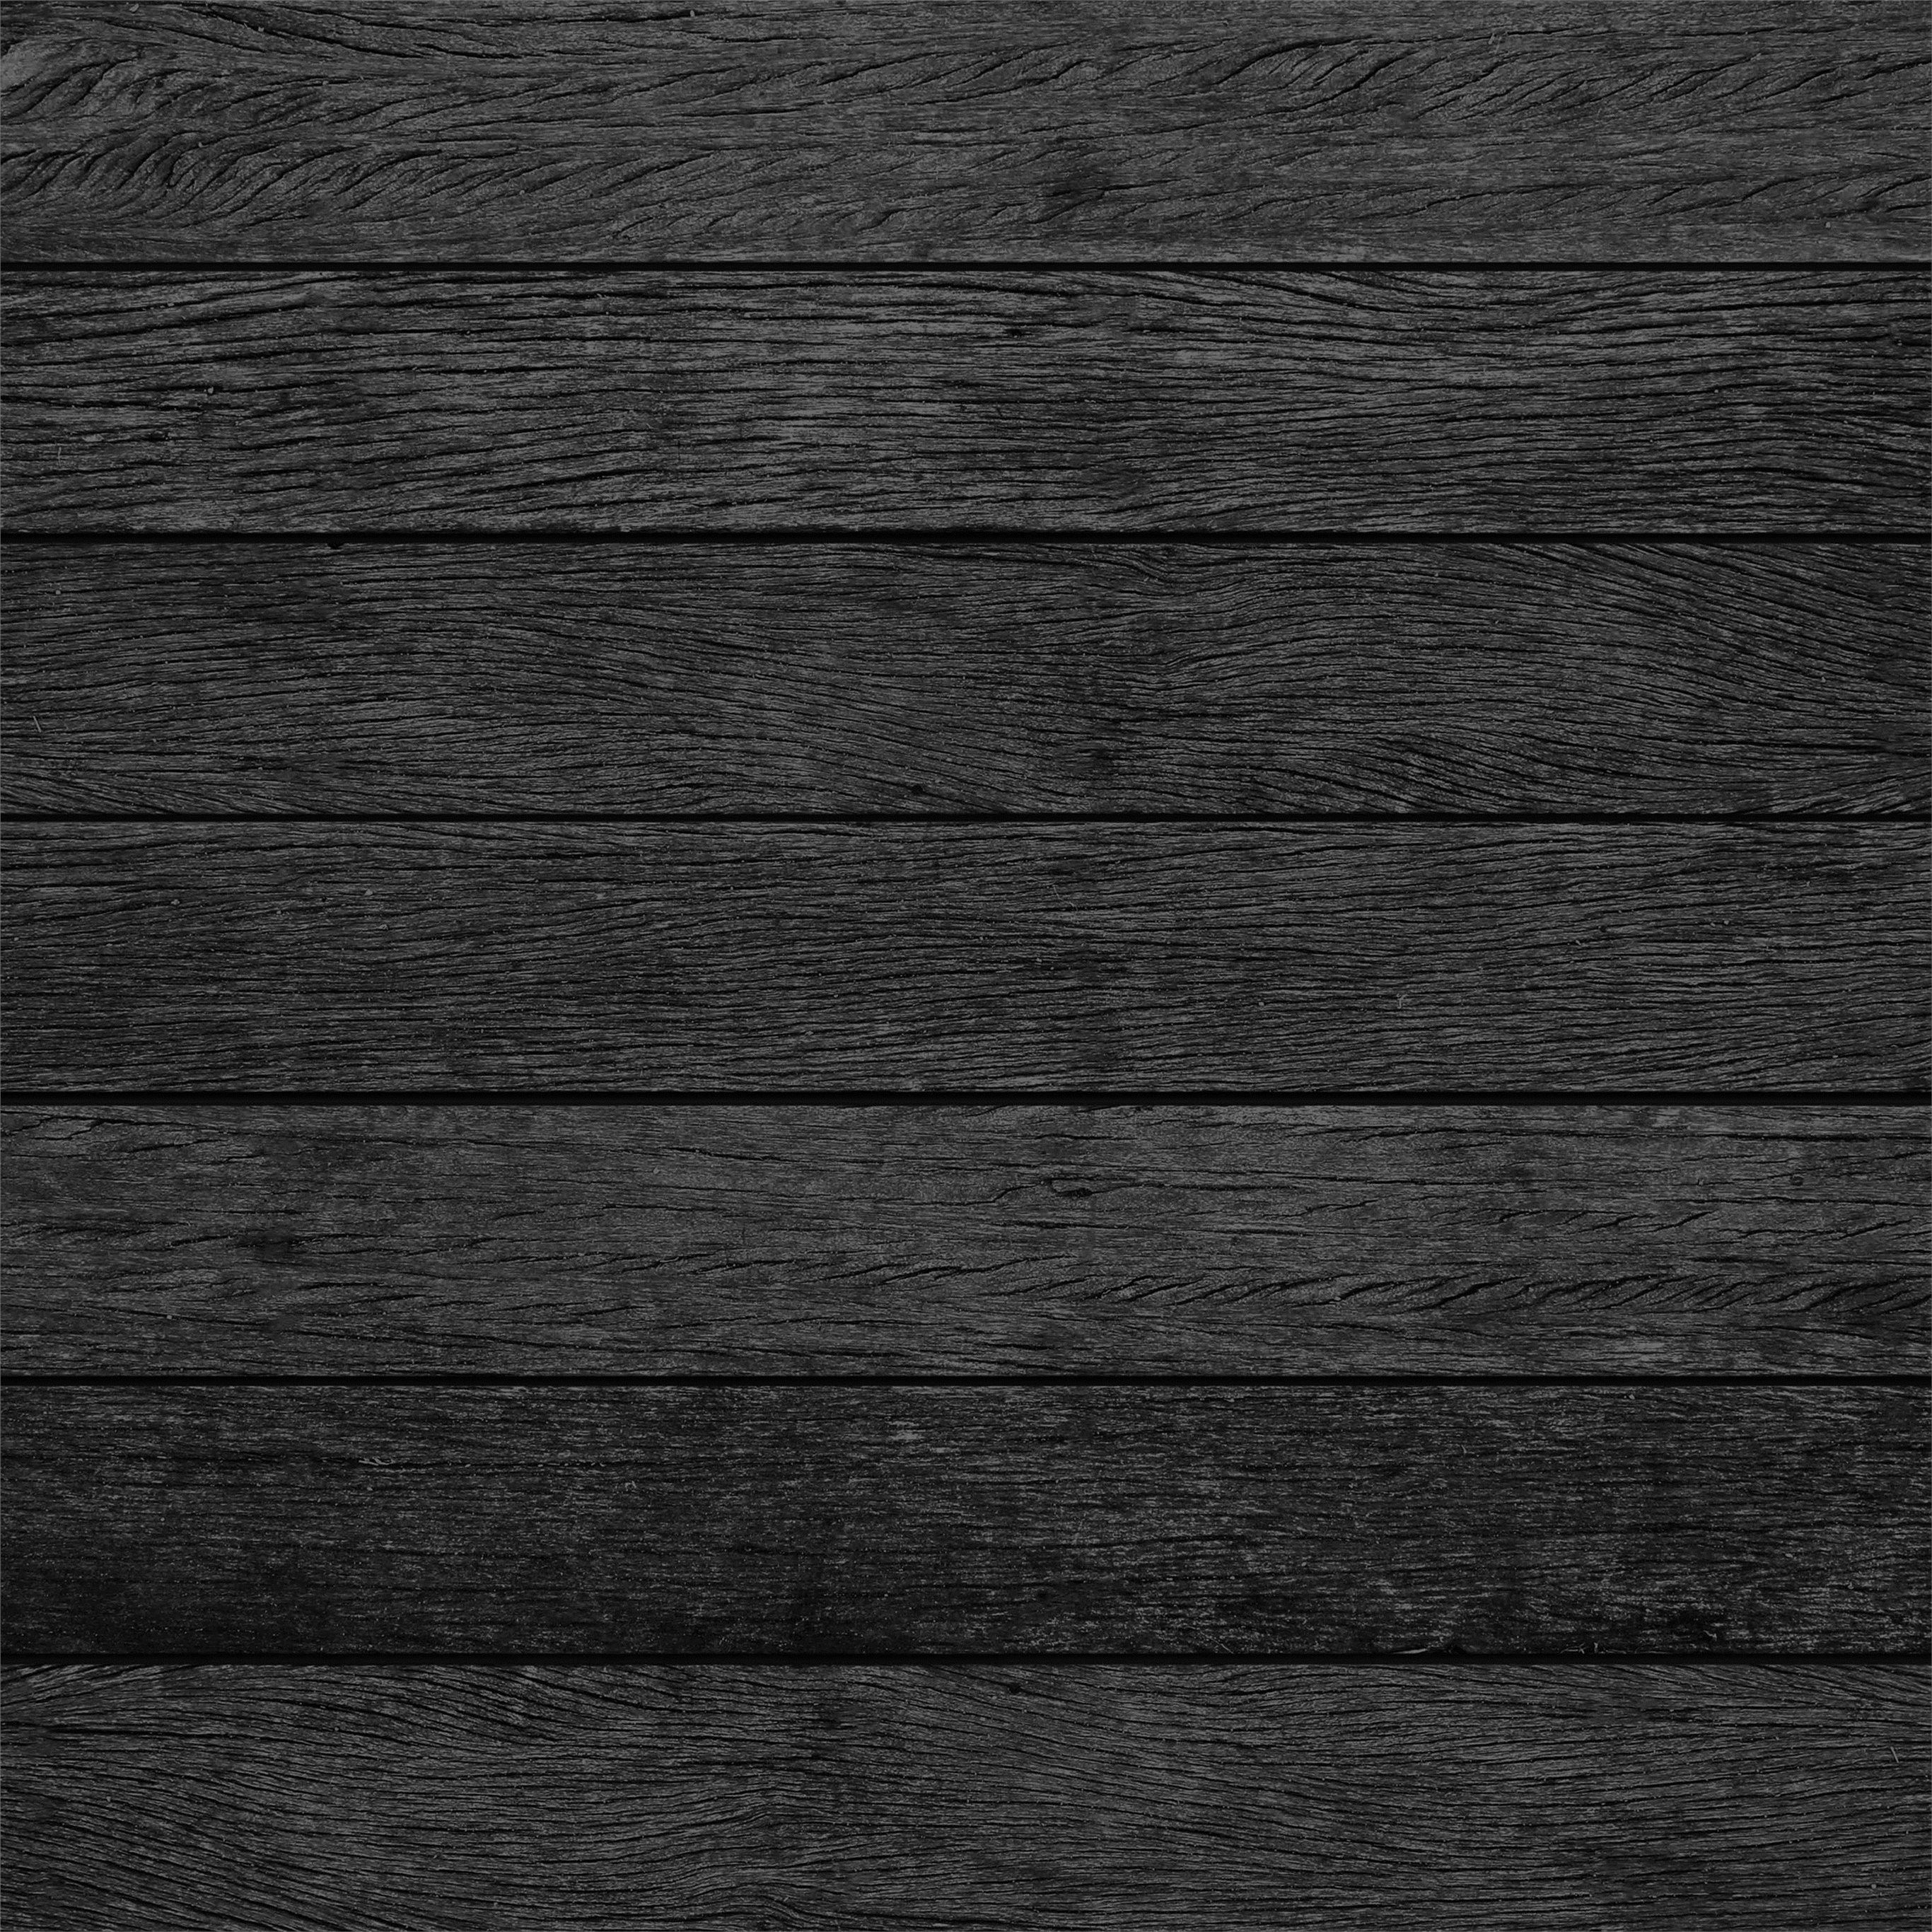 abstract dark wood iPad Pro Wallpapers Free Download